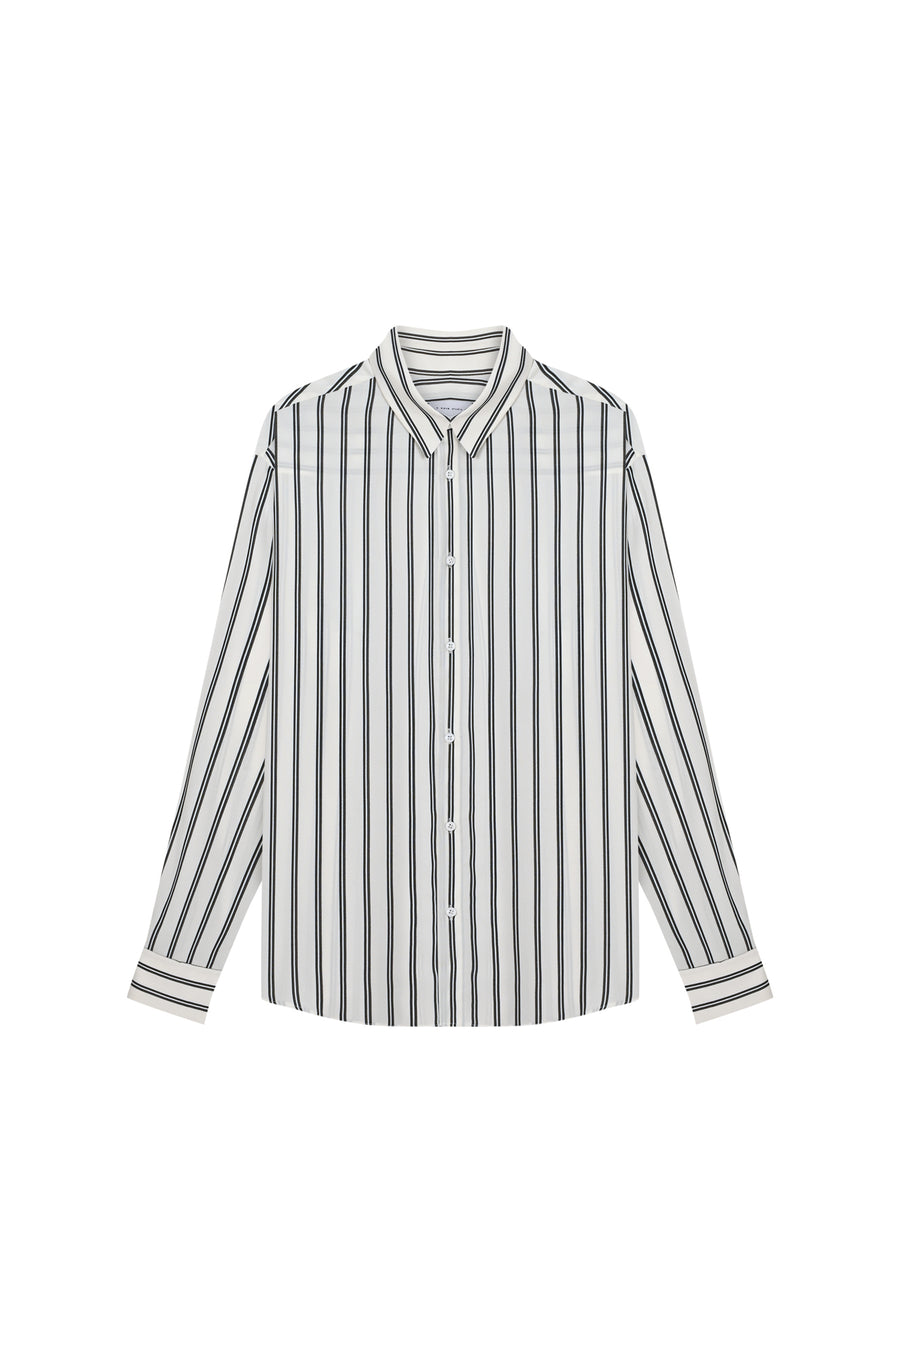 The Olivier white striped shirt